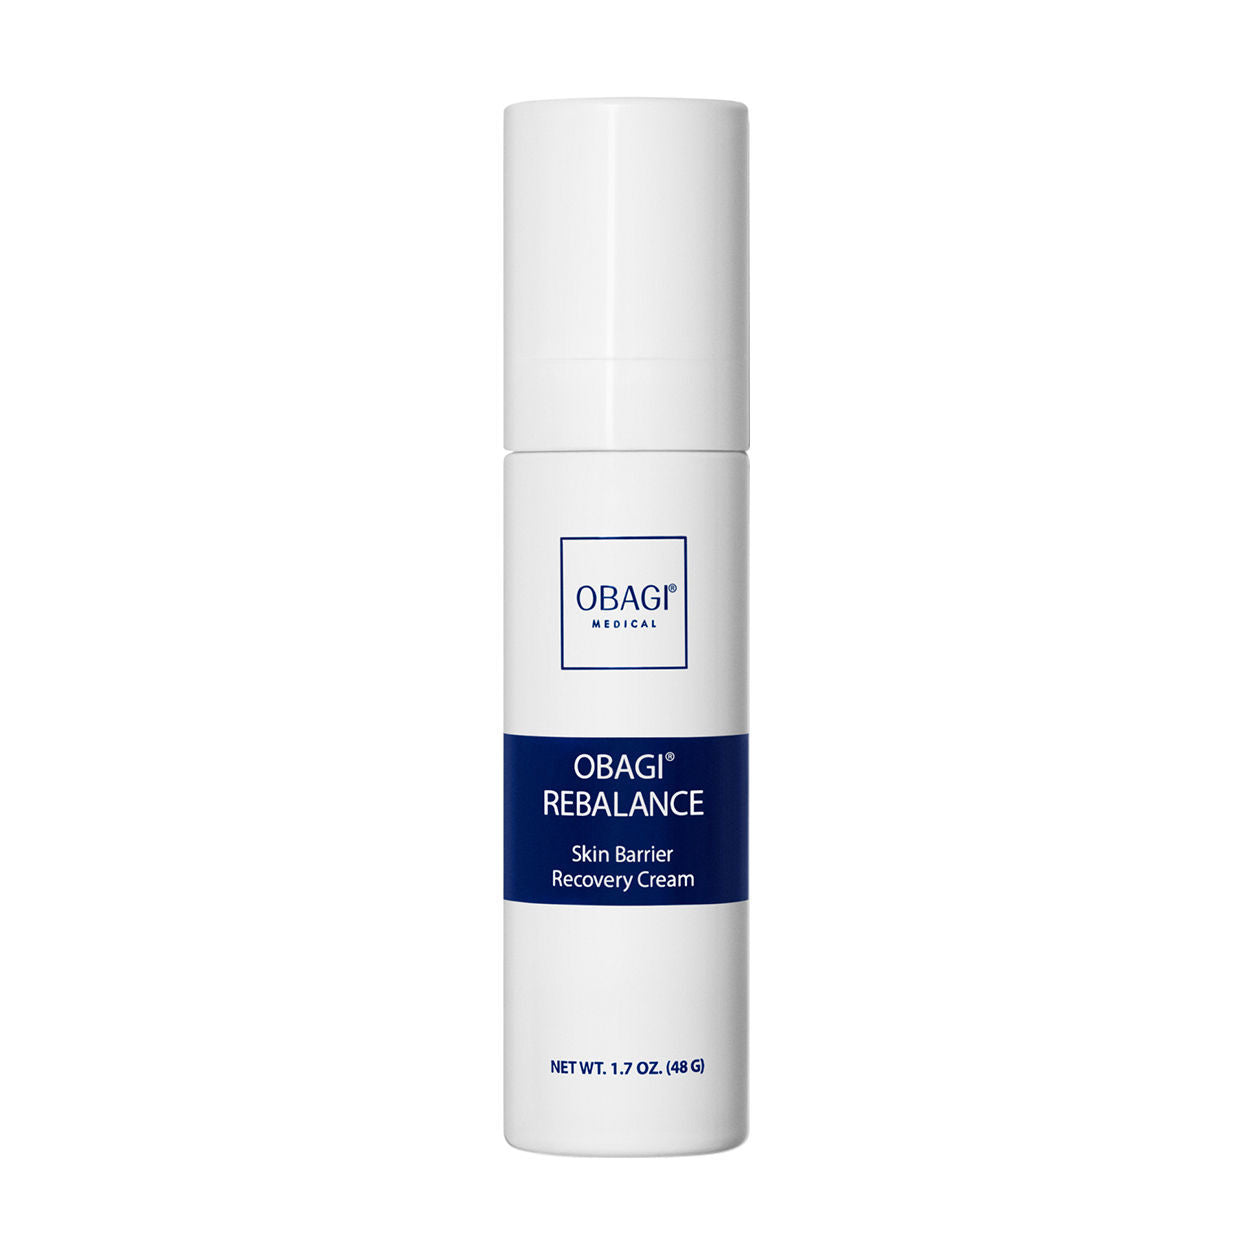 Obagi Rebalance Skin Barrier Recovery Cream main image